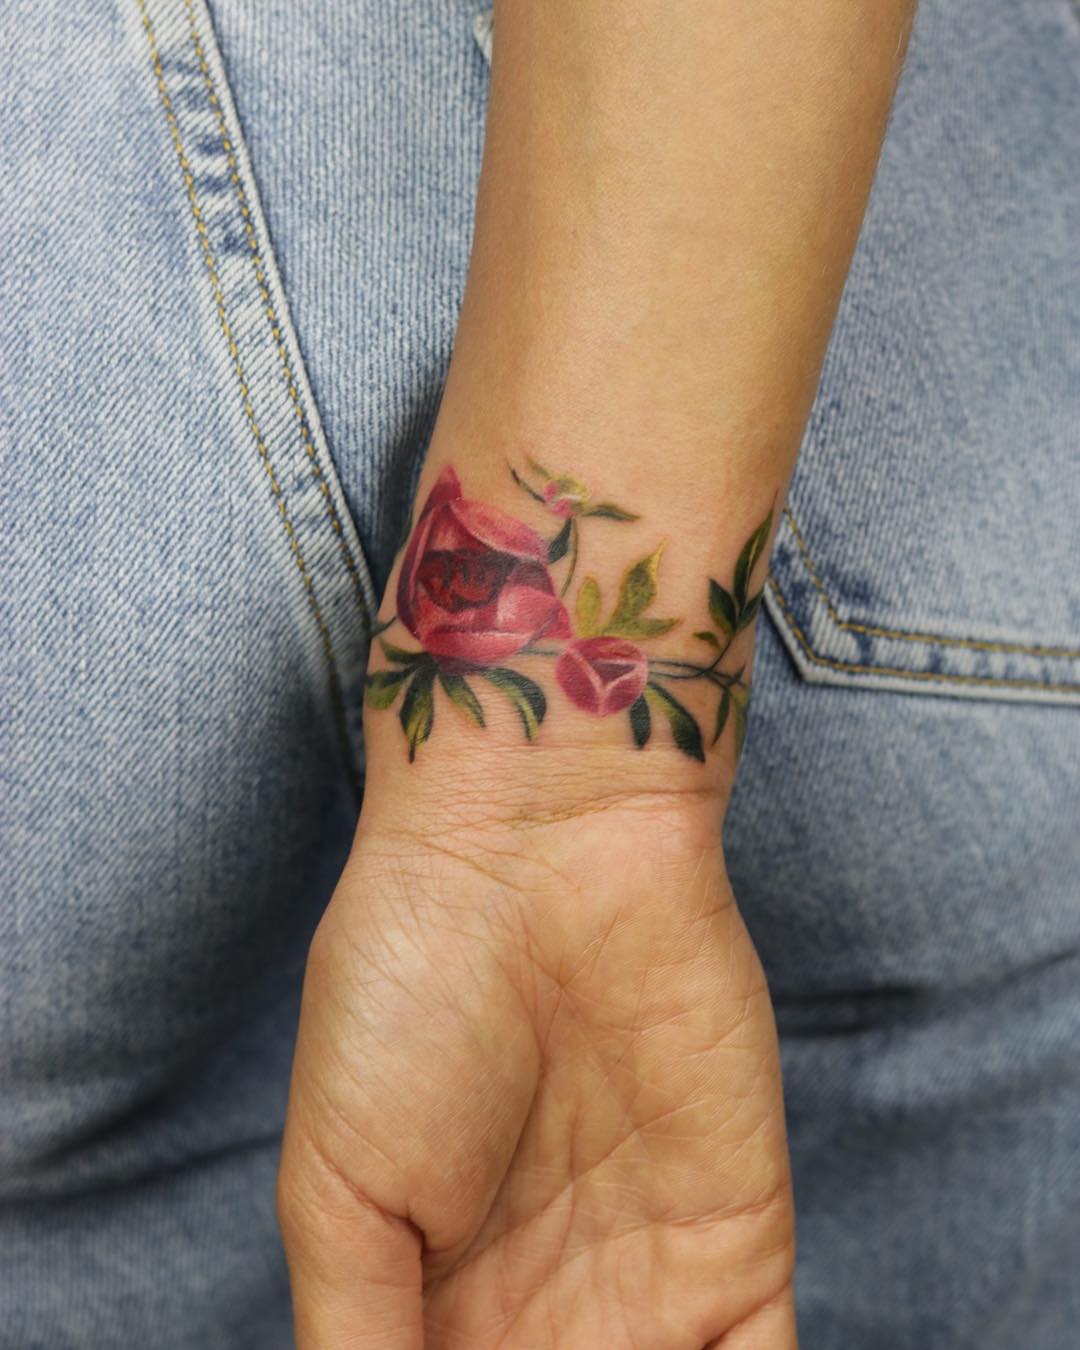 Fine line flower bracelet tattoo on the forearm.